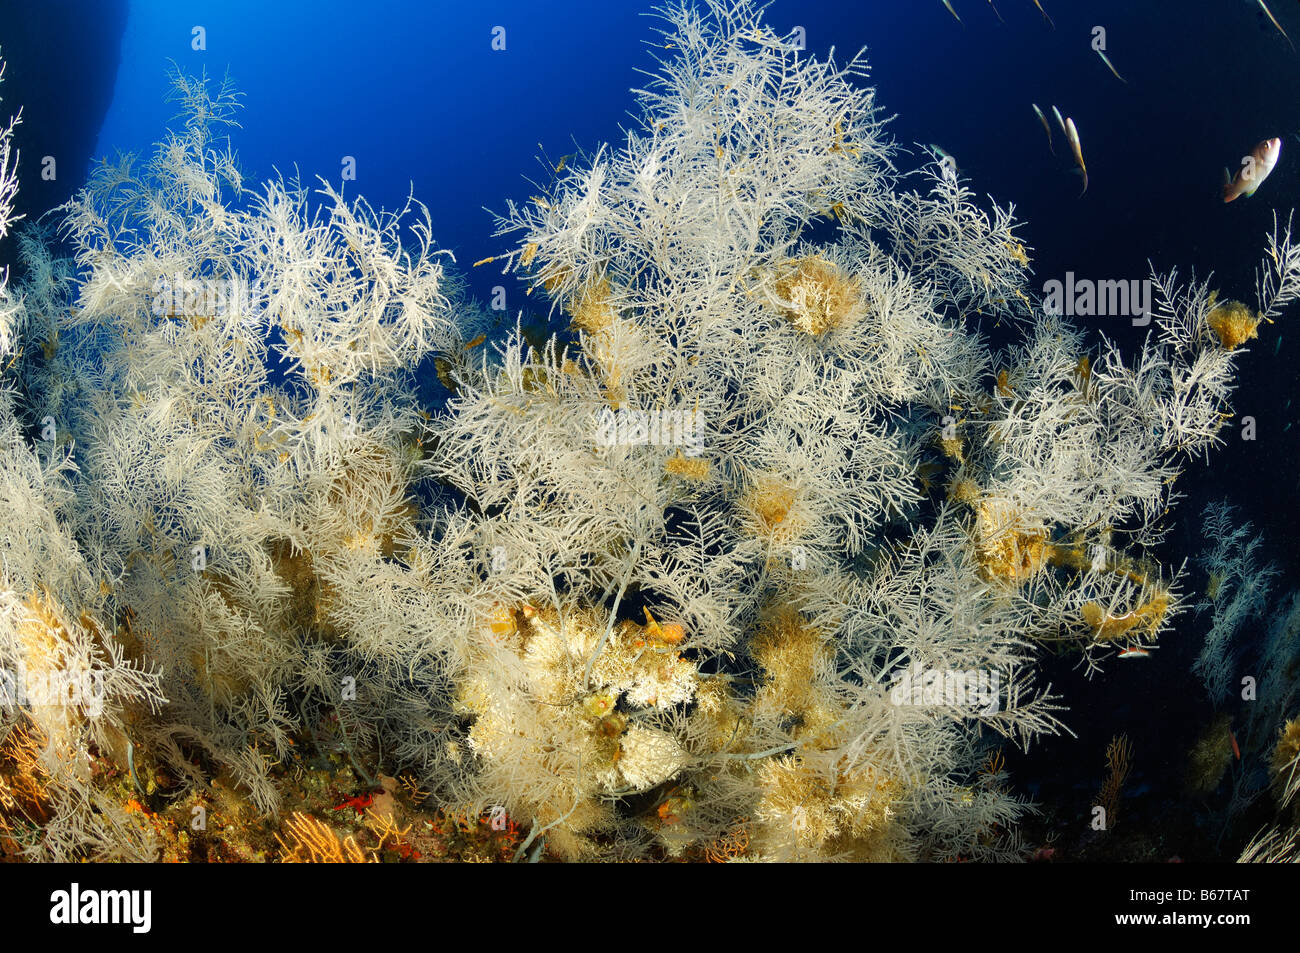 Black Corals at Reef Anthipathes dichotoma Svetac Vis Island Mediterranean Sea Croatia Stock Photo